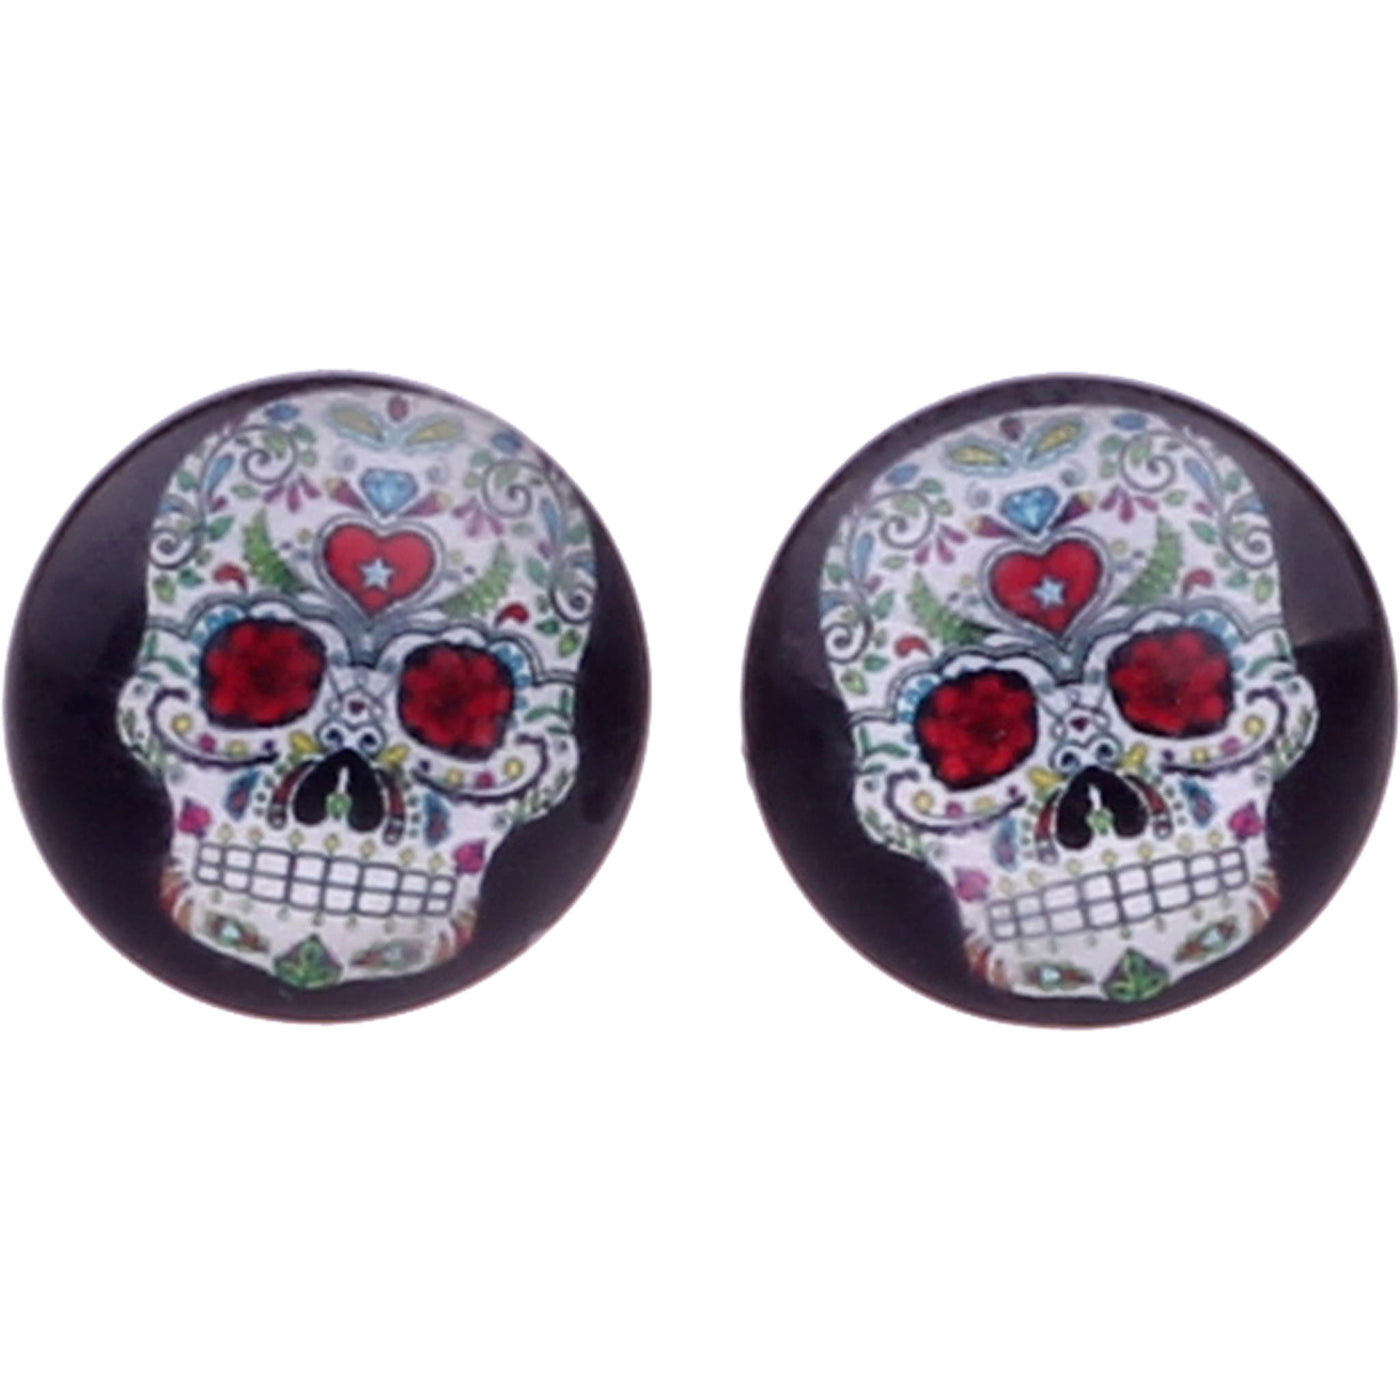 Mexican Sugar Skull Earrings